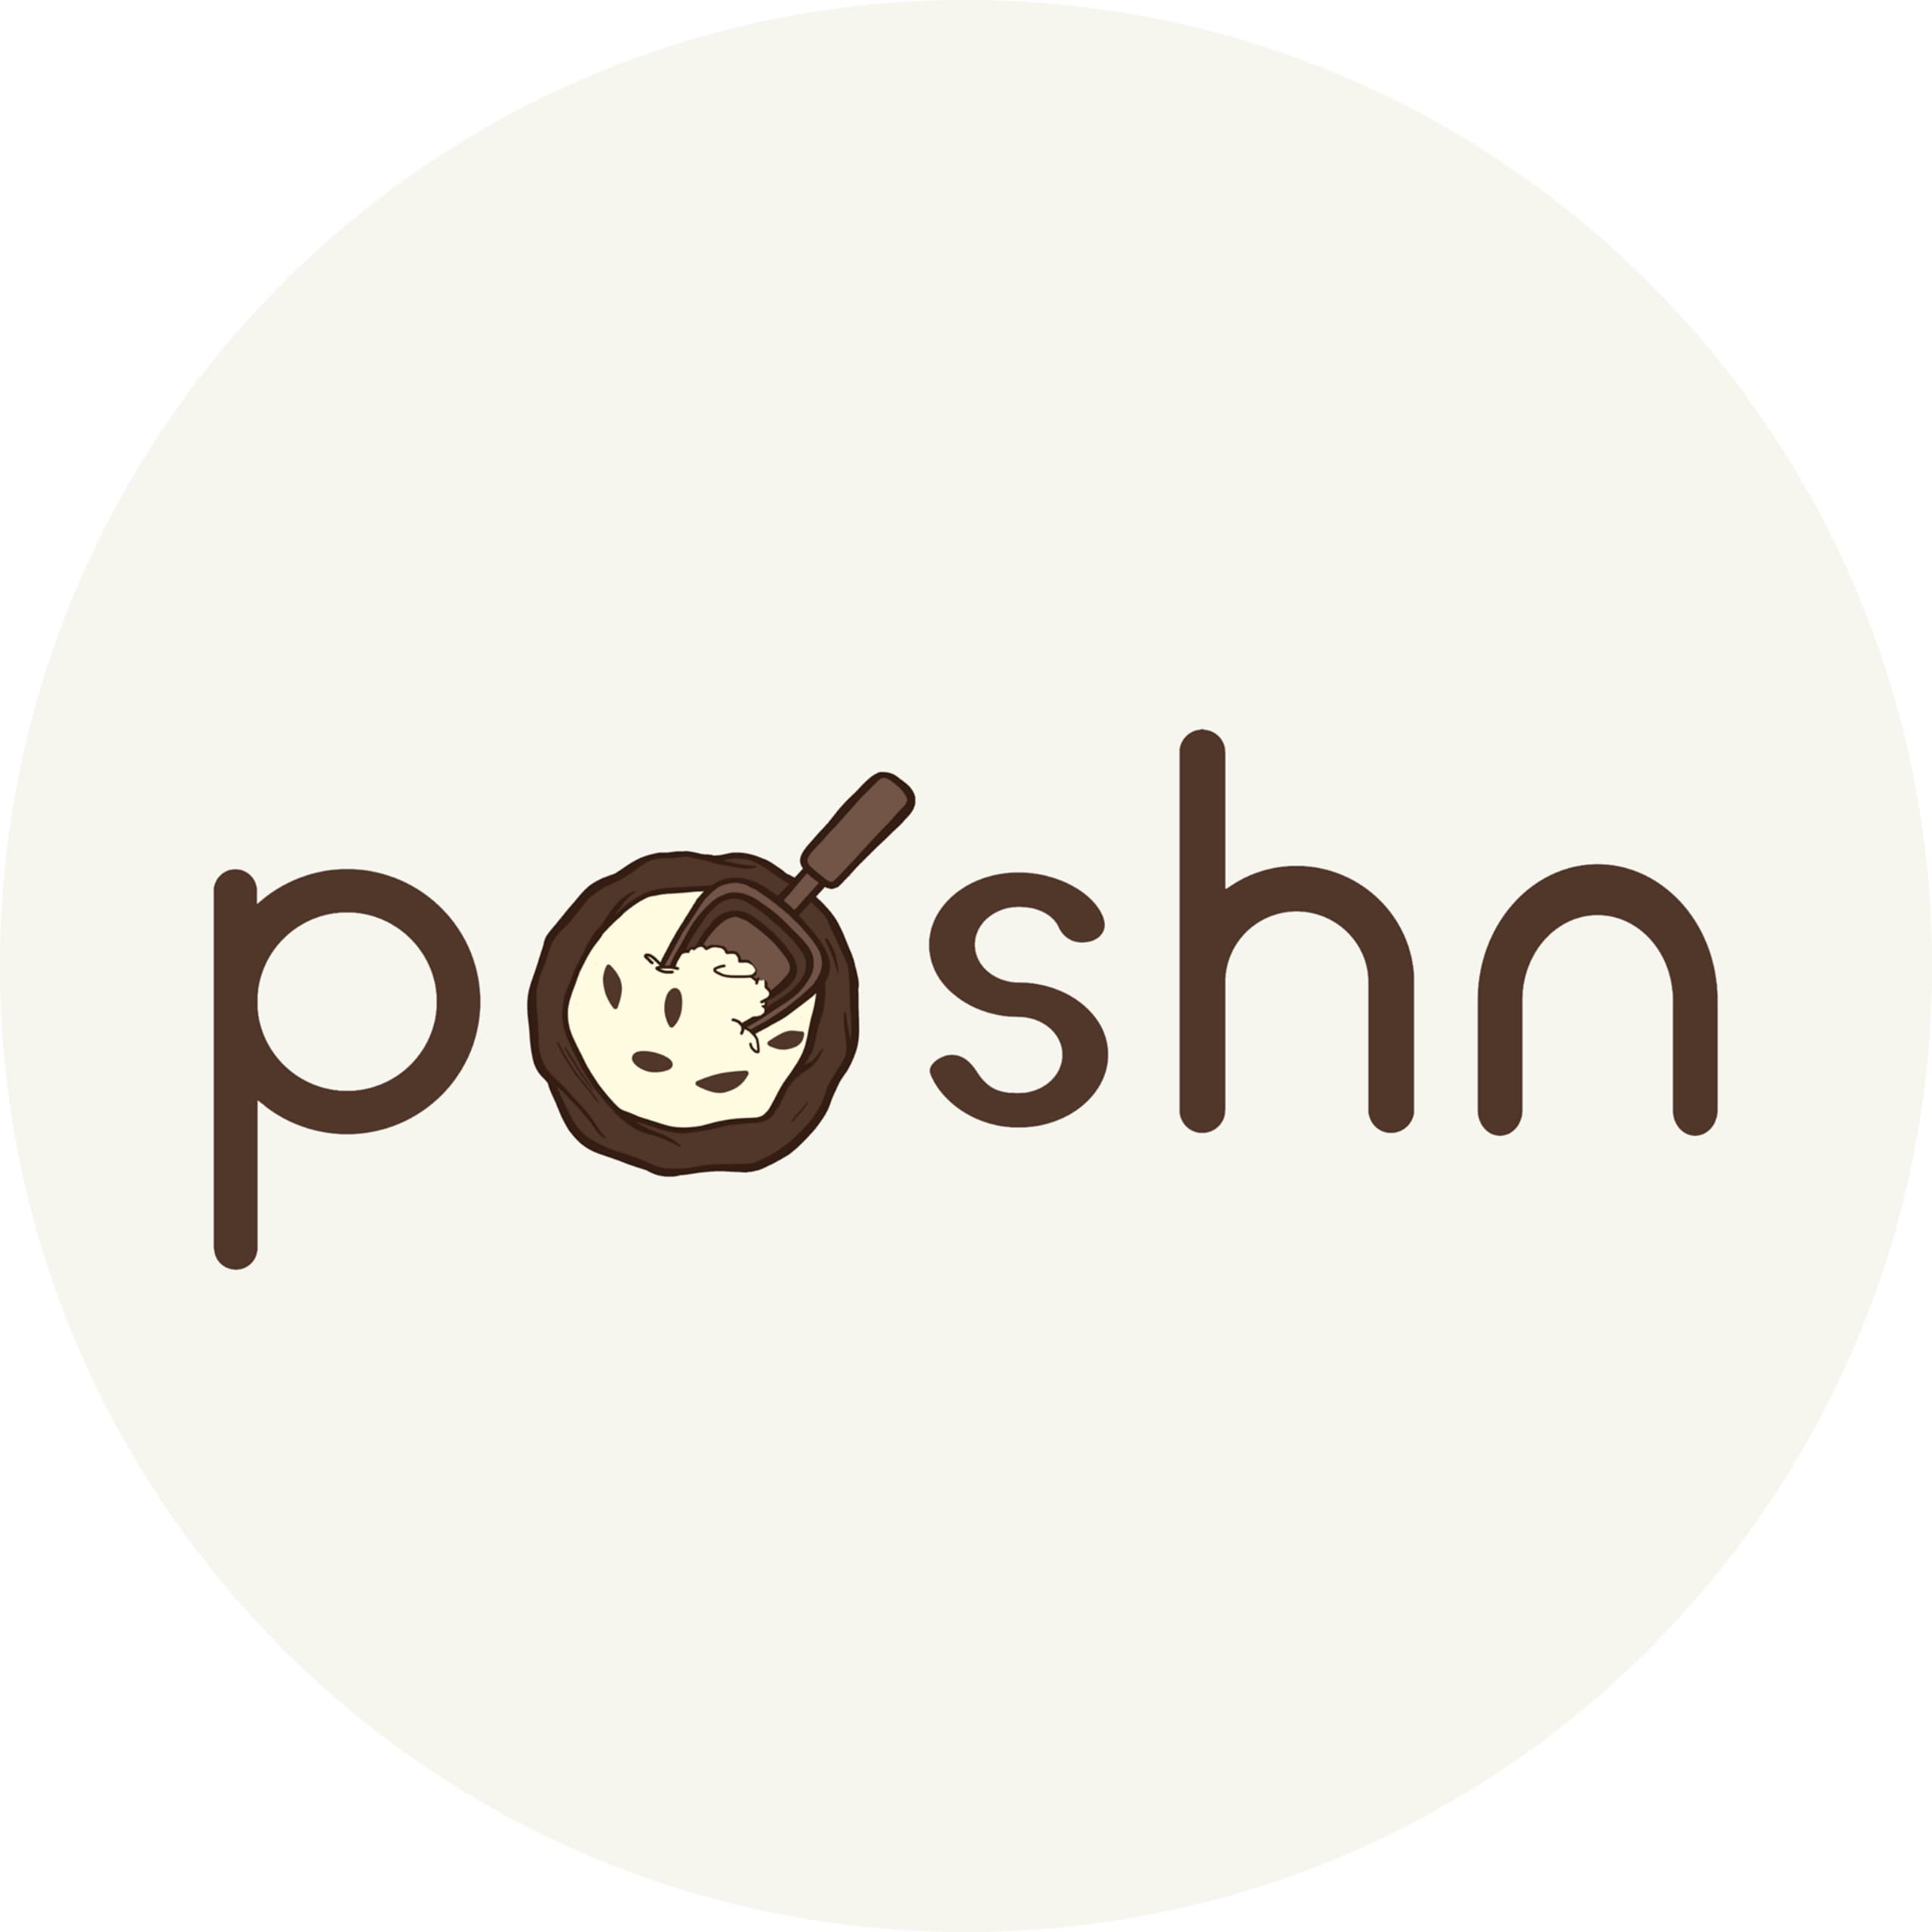 POSHN (STSPL)'s logo